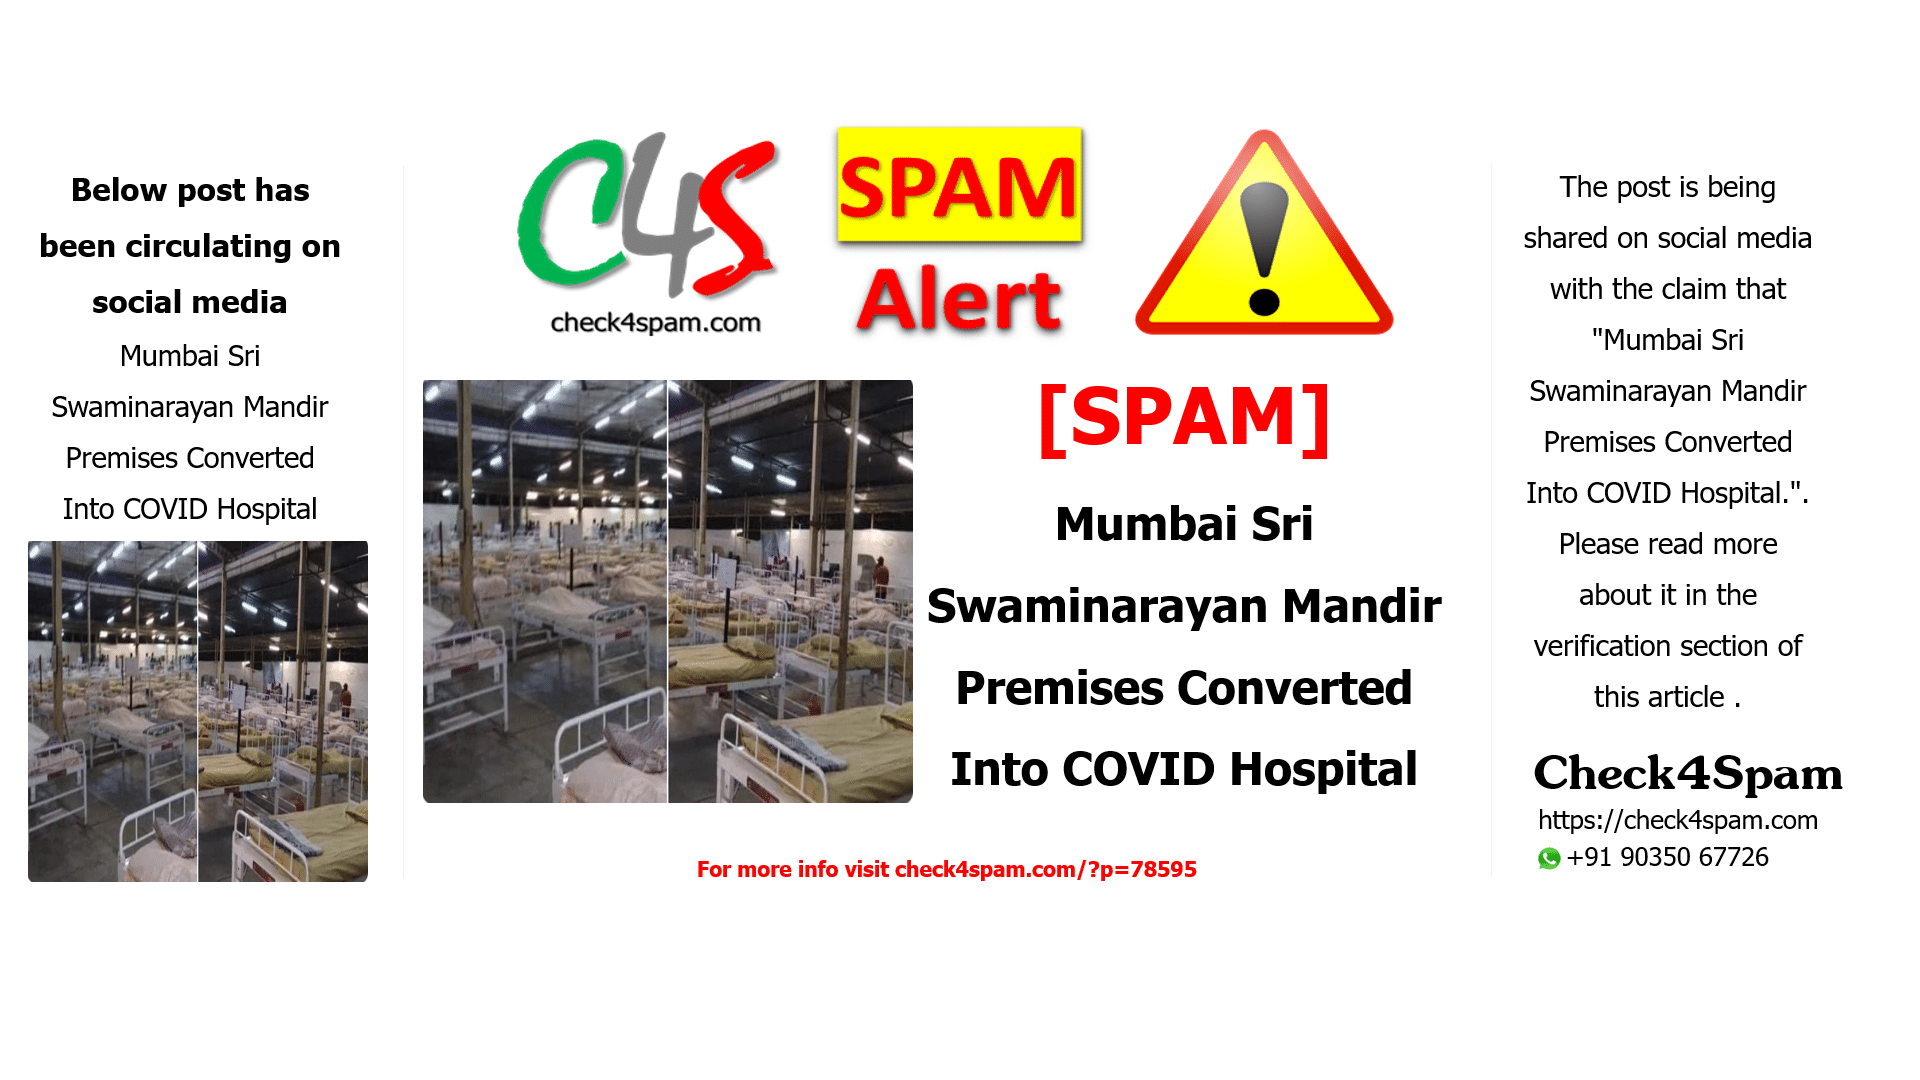 Mumbai Sri Swaminarayan Mandir Premises Converted Into COVID Hospital